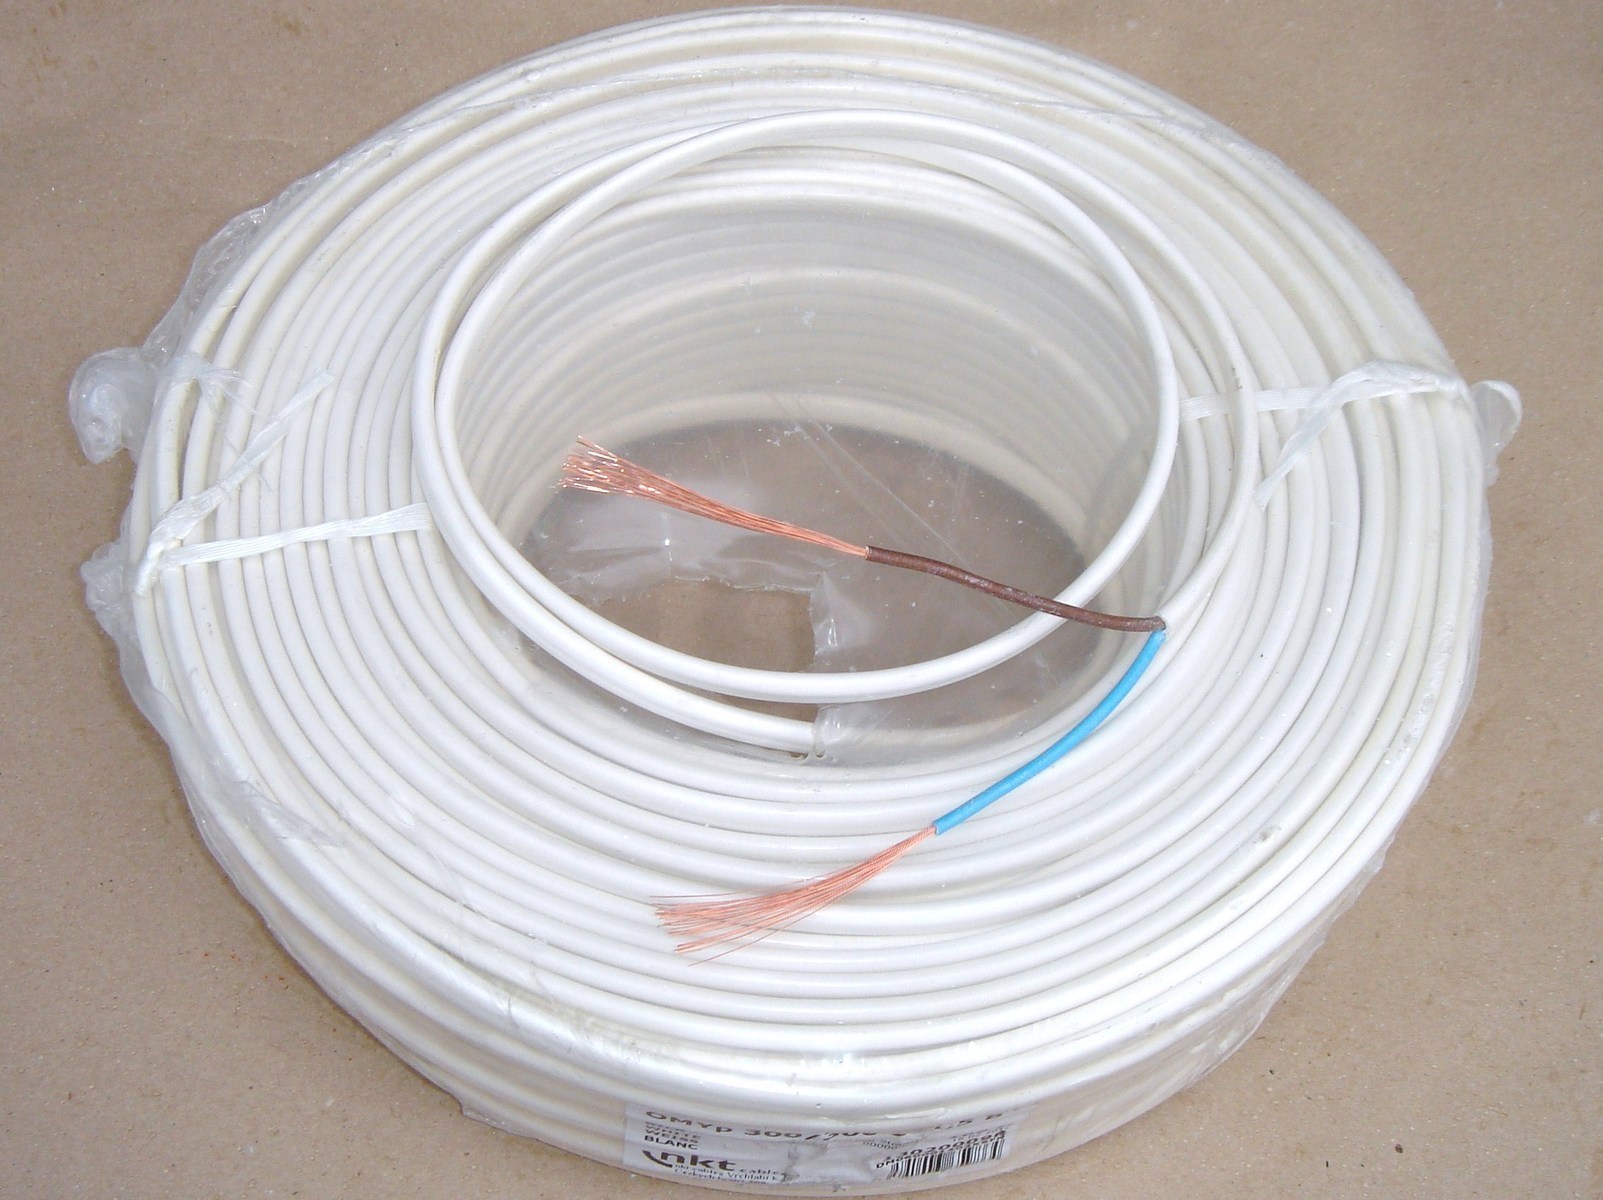  кабель 2x1,5мм² - 0,25 €/м, медные кабели 2x1,5мм², 2x1,5мм, 2x1 .